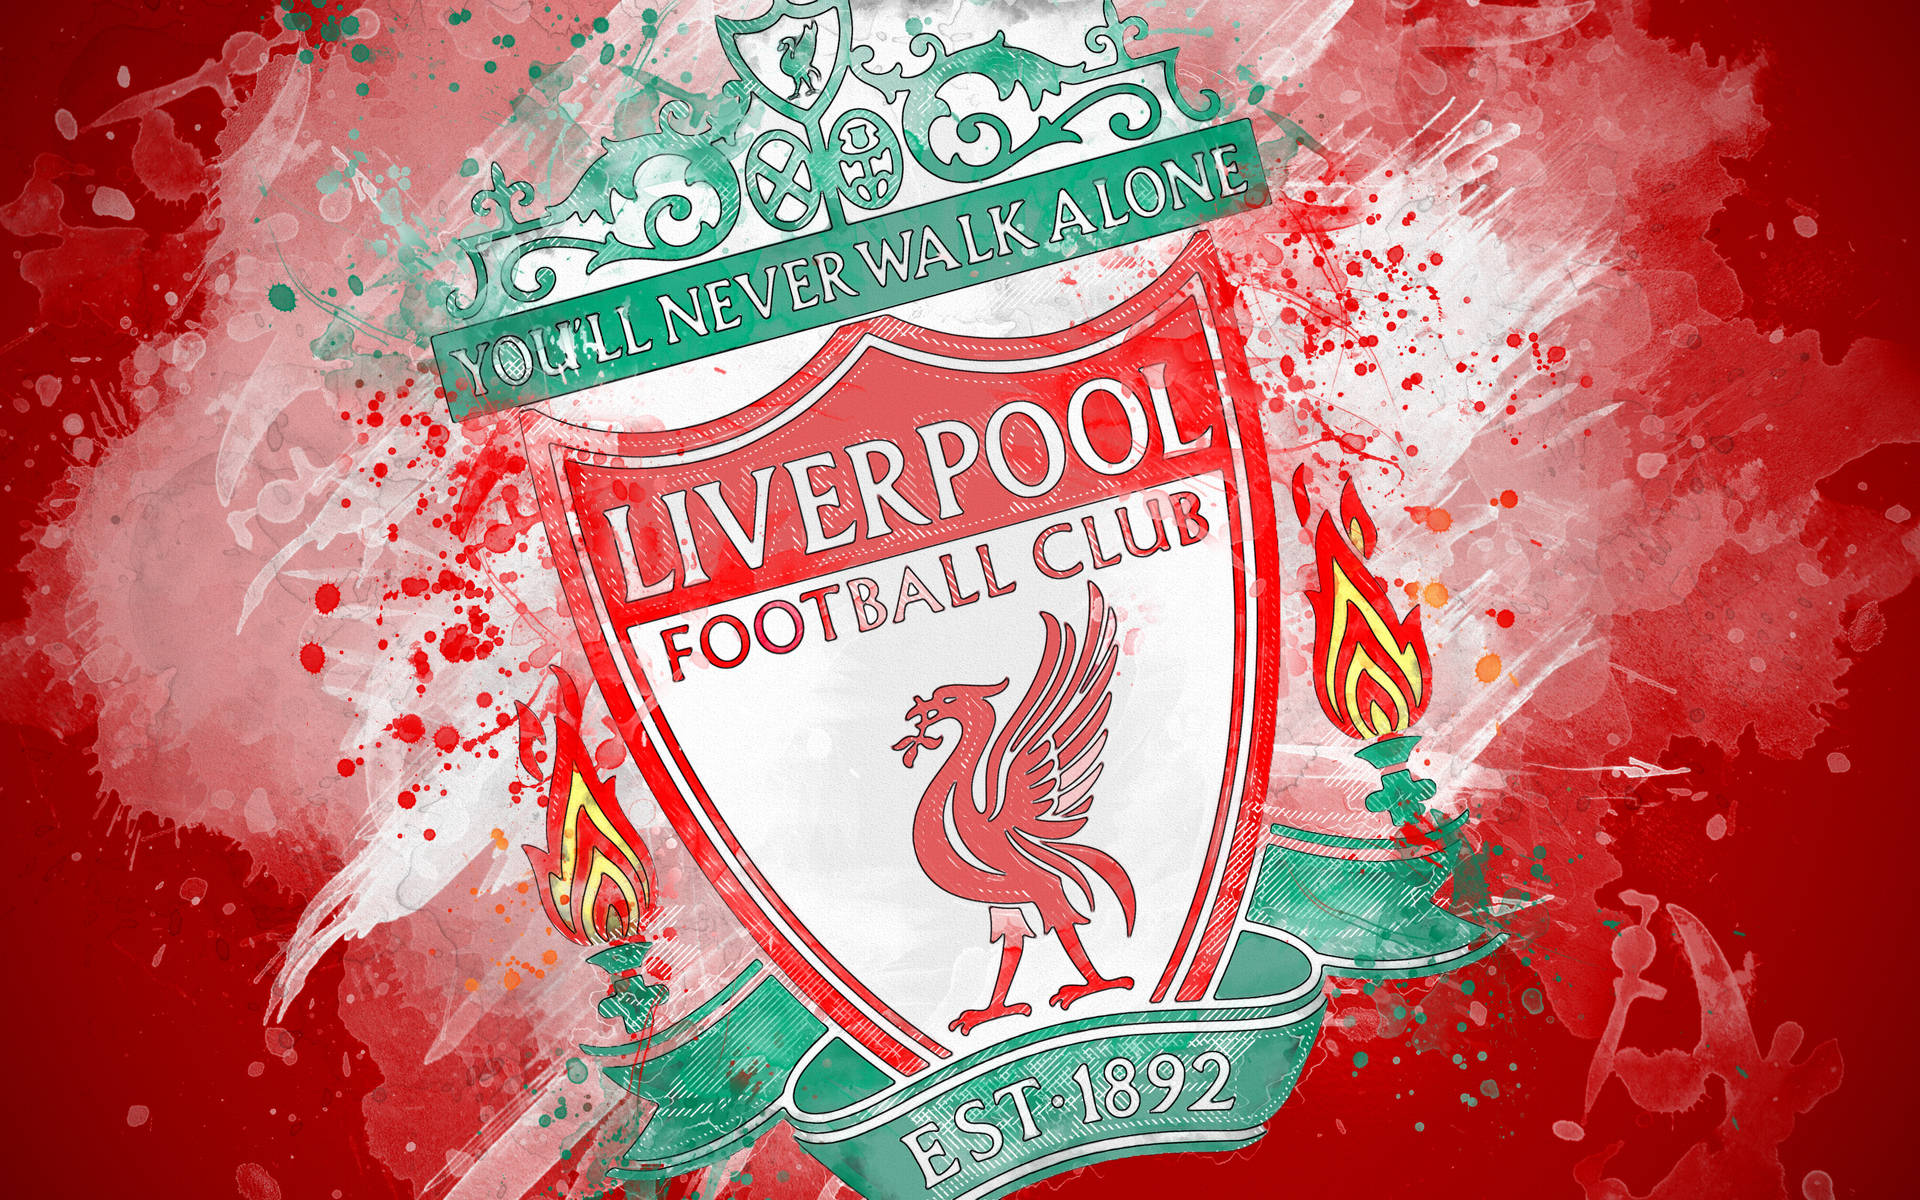 Liverpool Fc Logo